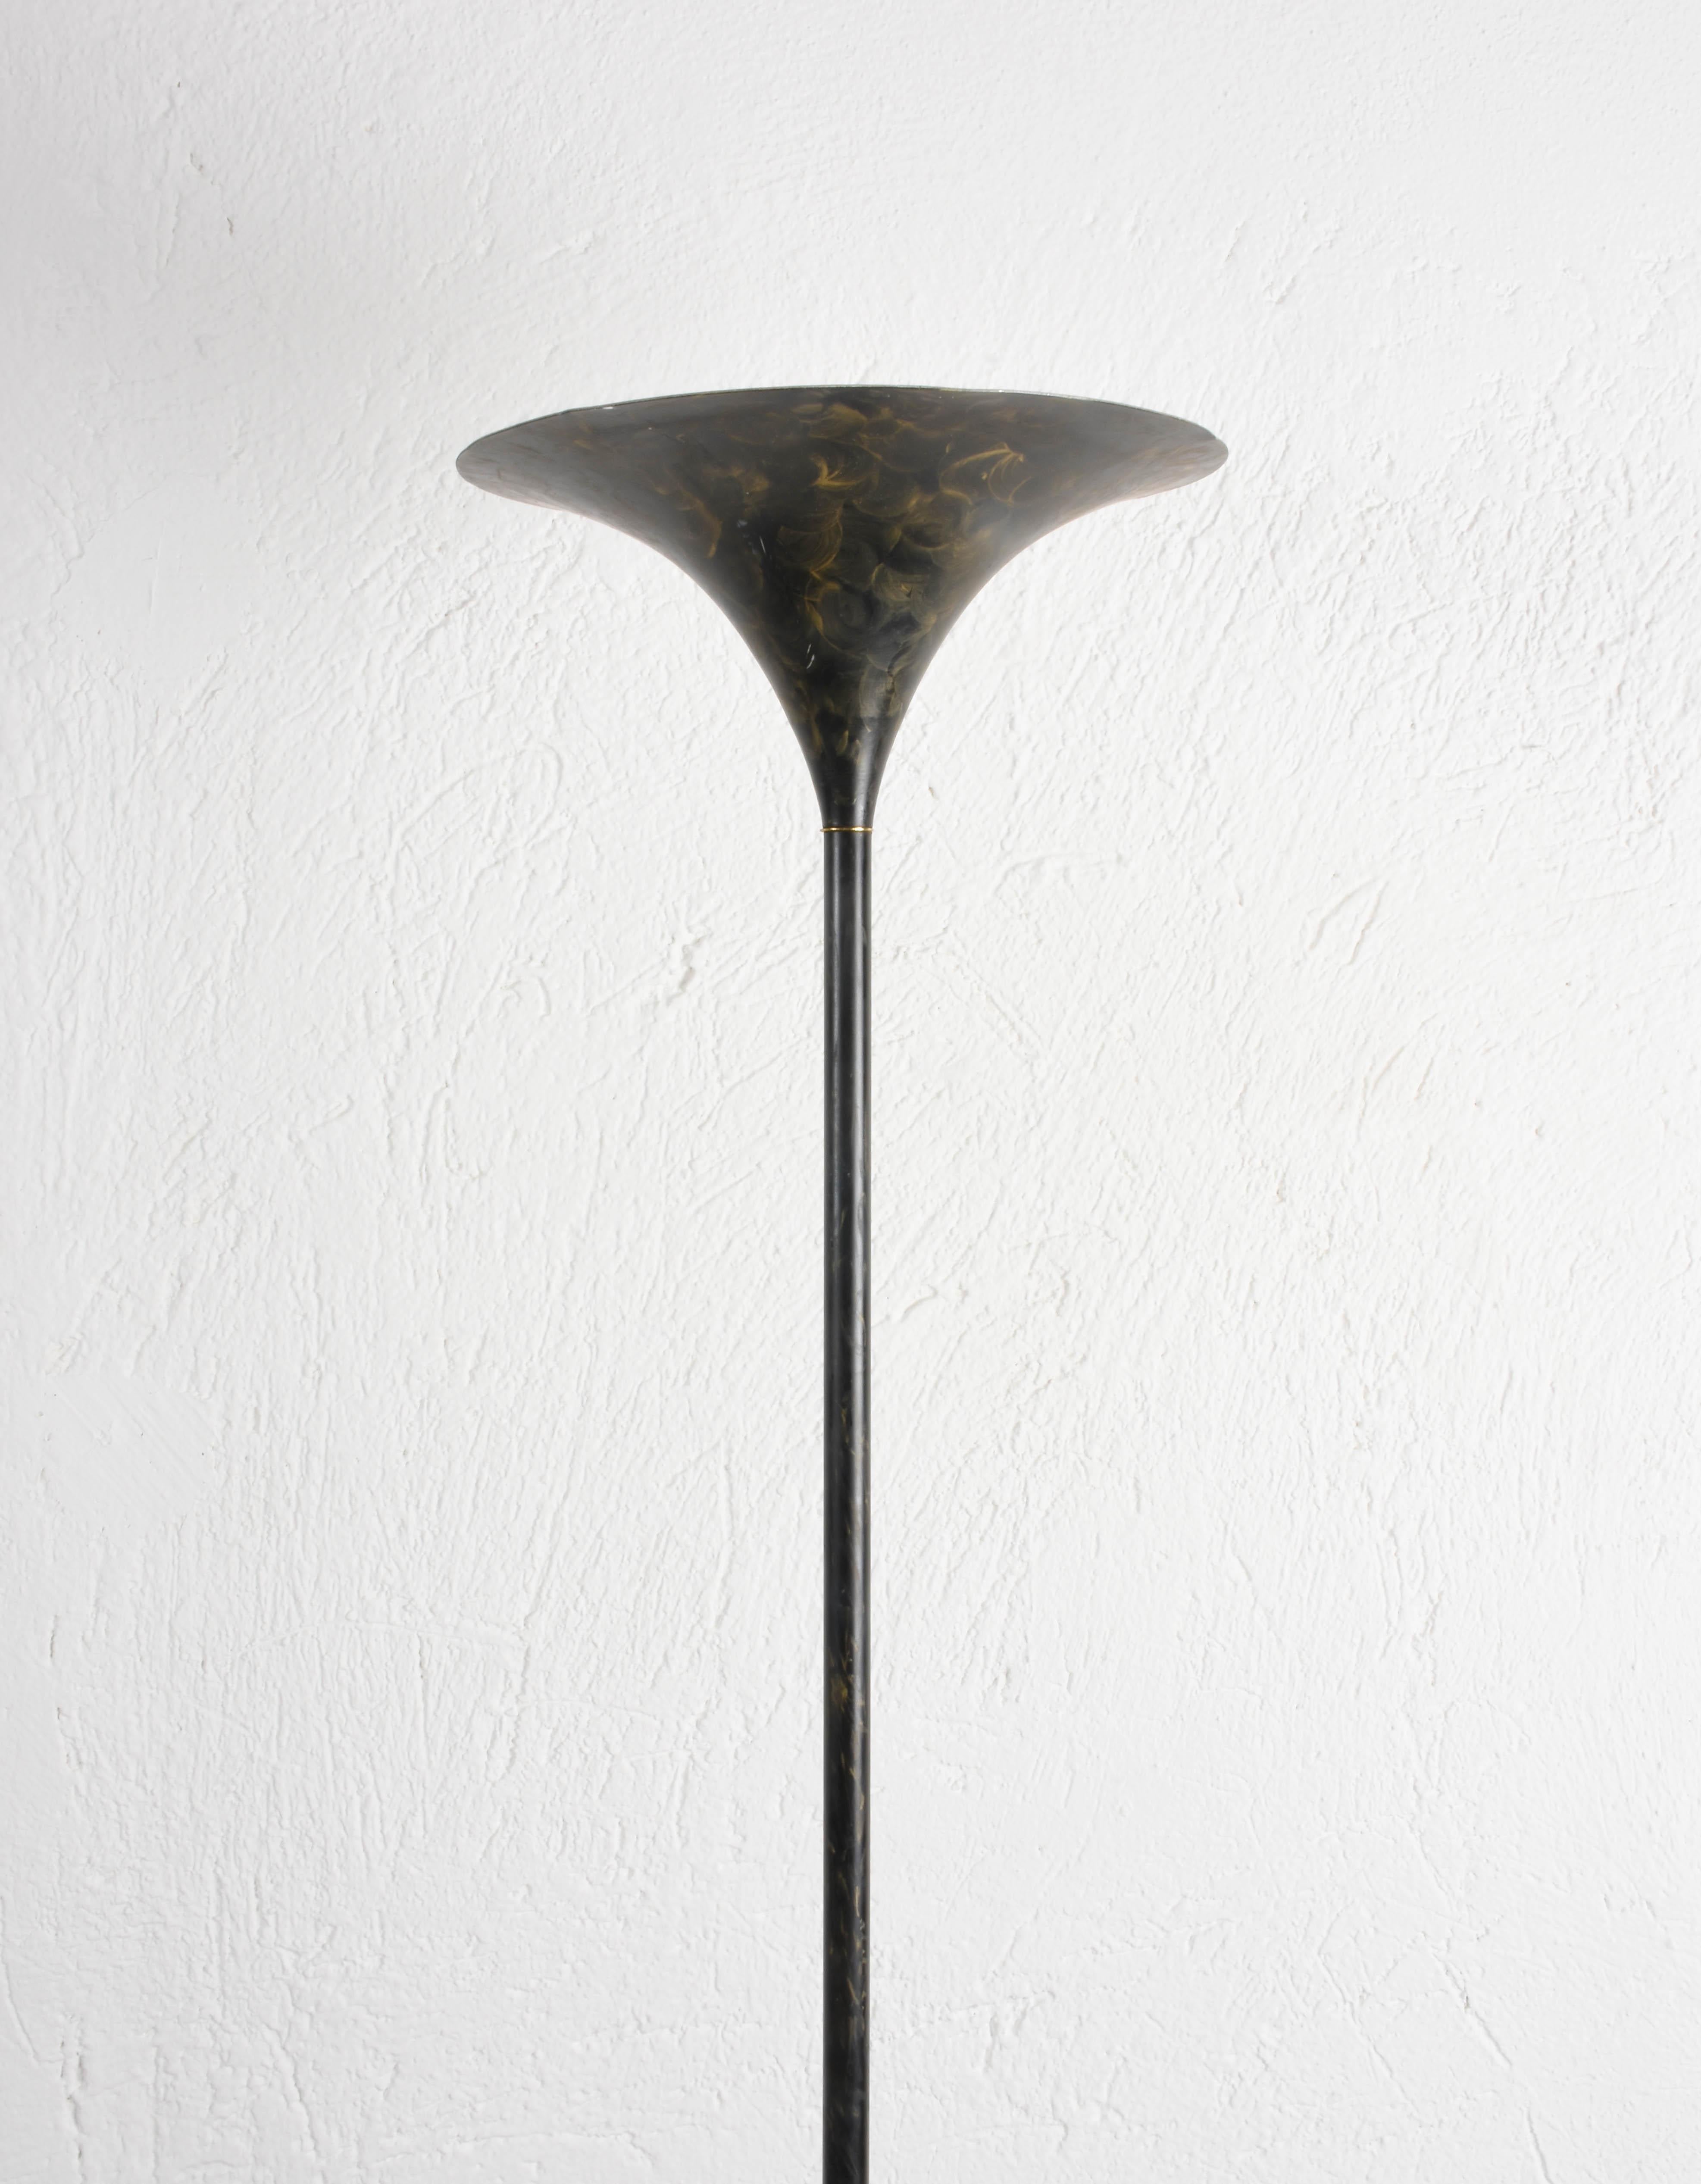 Midcentury Black Aluminum Tulip Italian Floor Lamp with Gold Finishes, 1970s For Sale 4